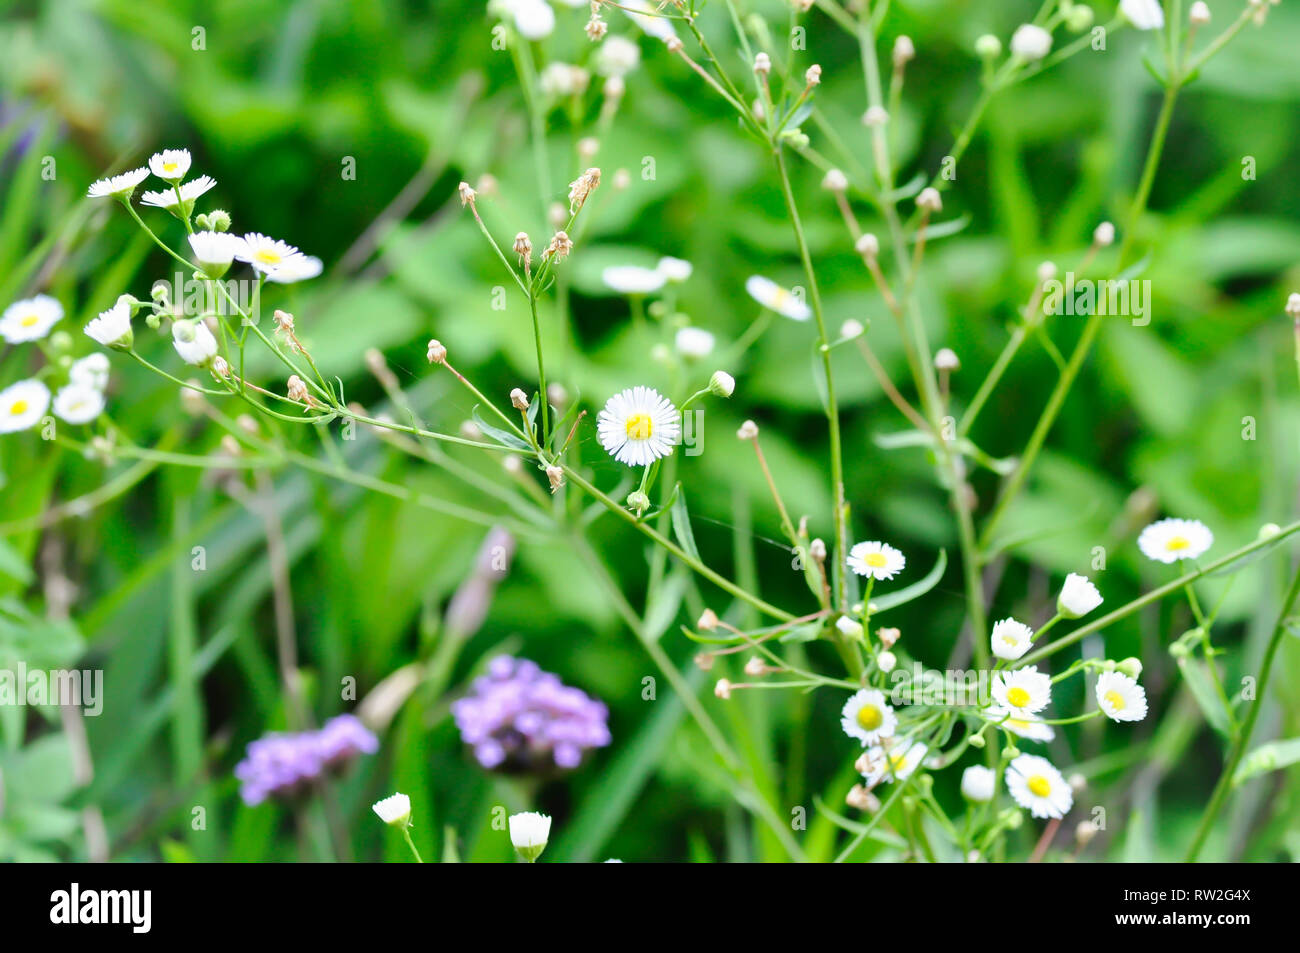 Daisy or Daisy flower and grass flower Stock Photo